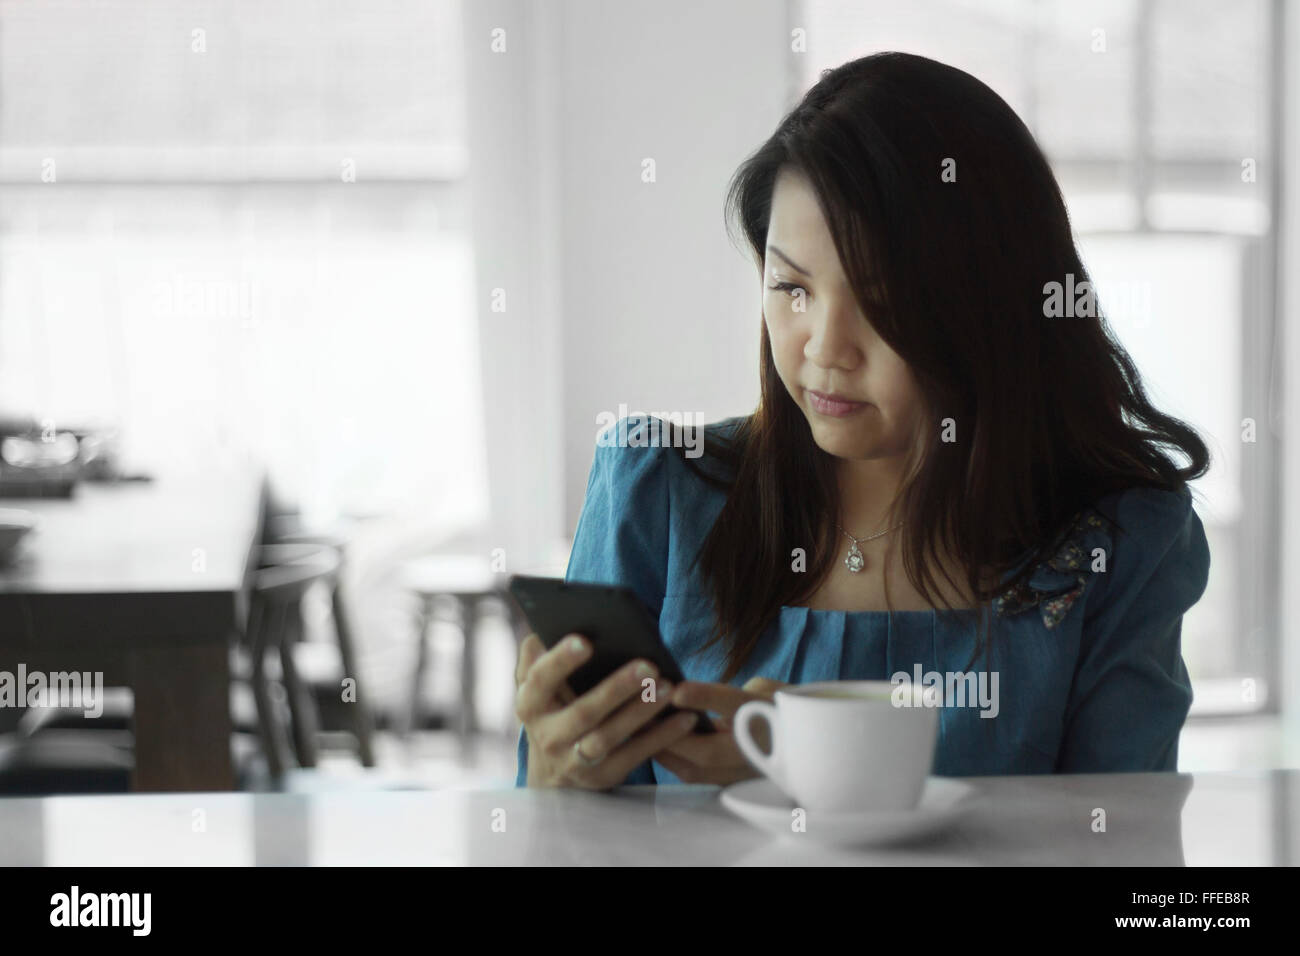 Femmina asiatica belle donne ritratti look smart phone, ragazza cinese relax uno stile di vita in cafe Foto Stock